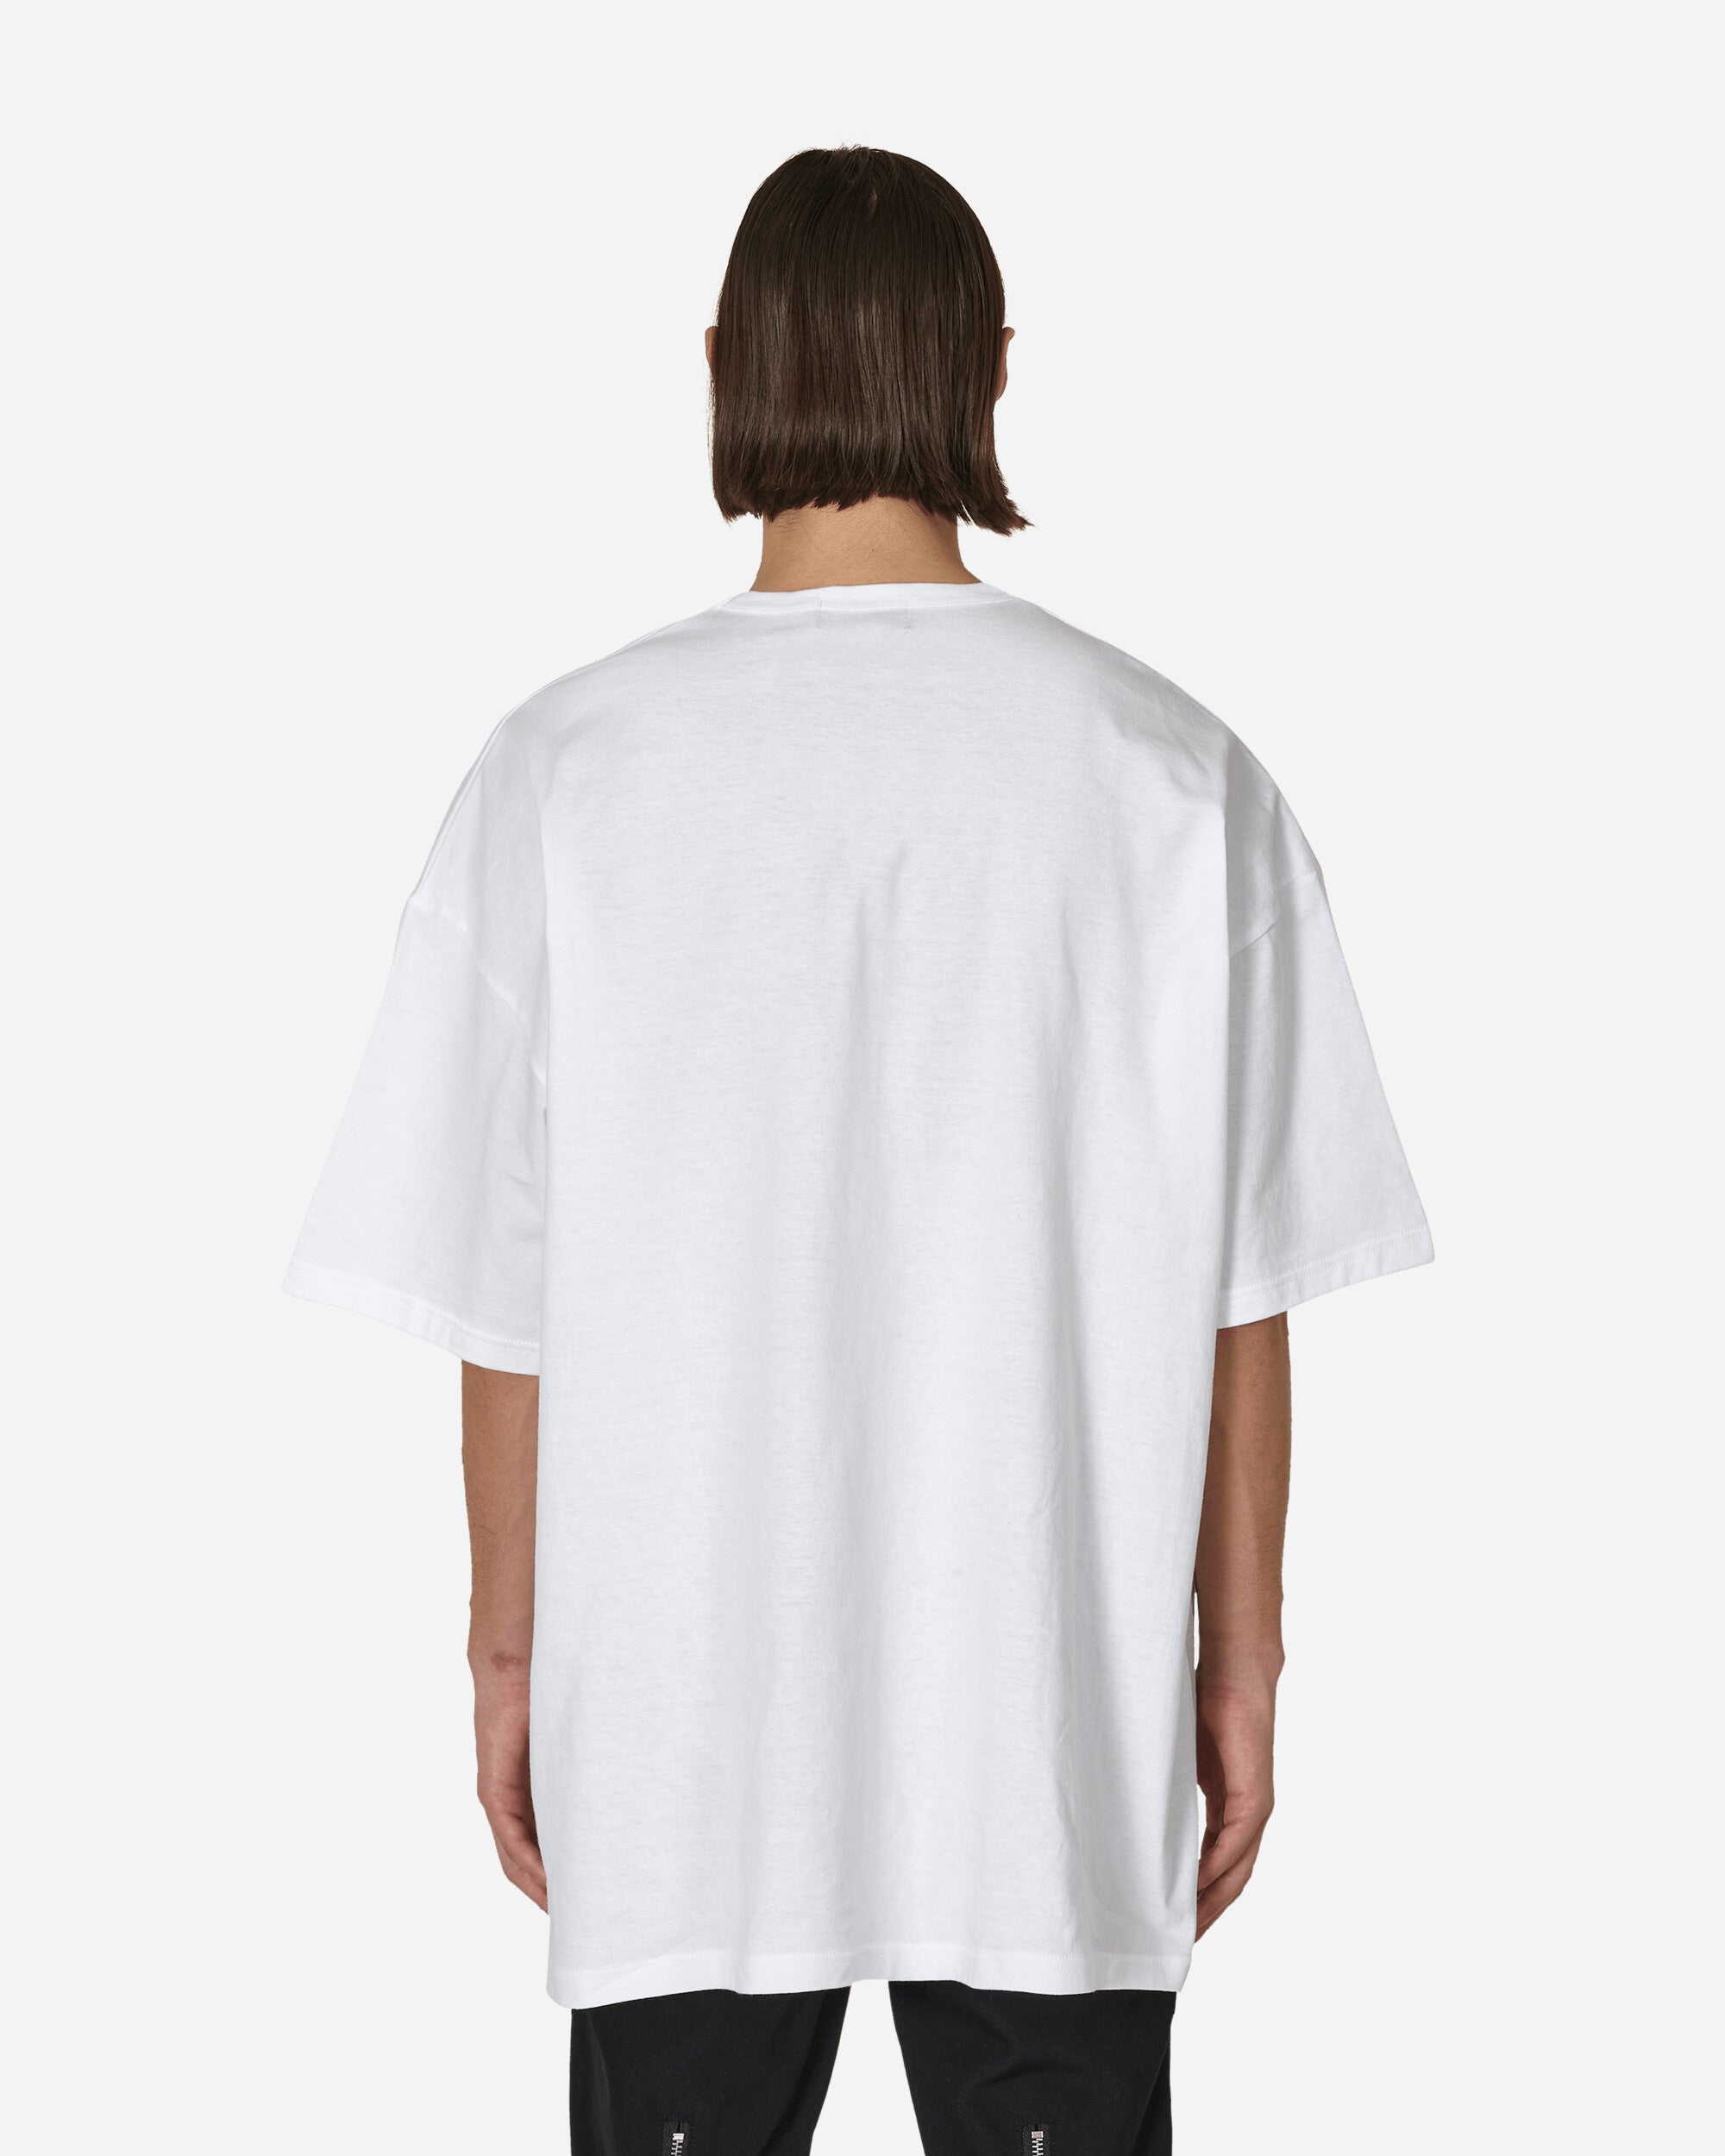 Comme Des Garçons Black T-Shirt White/Black T-Shirts Shortsleeve 1K-T106-S23 2